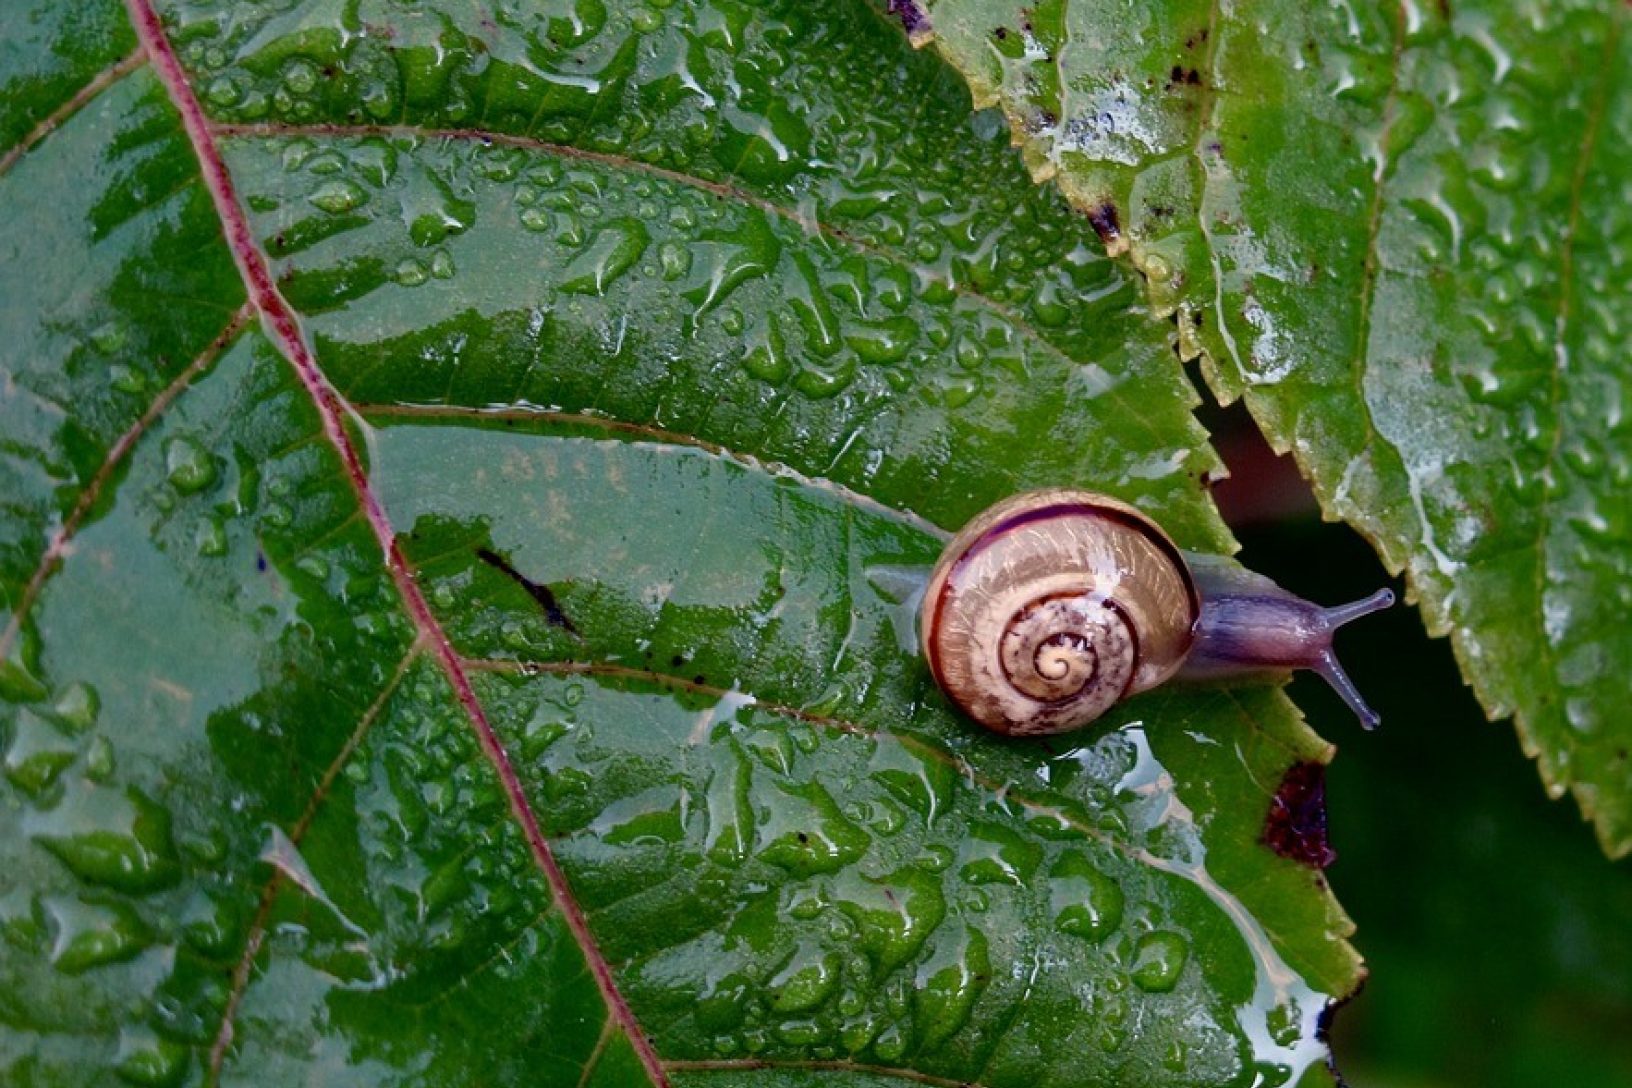 Snail deterring pests